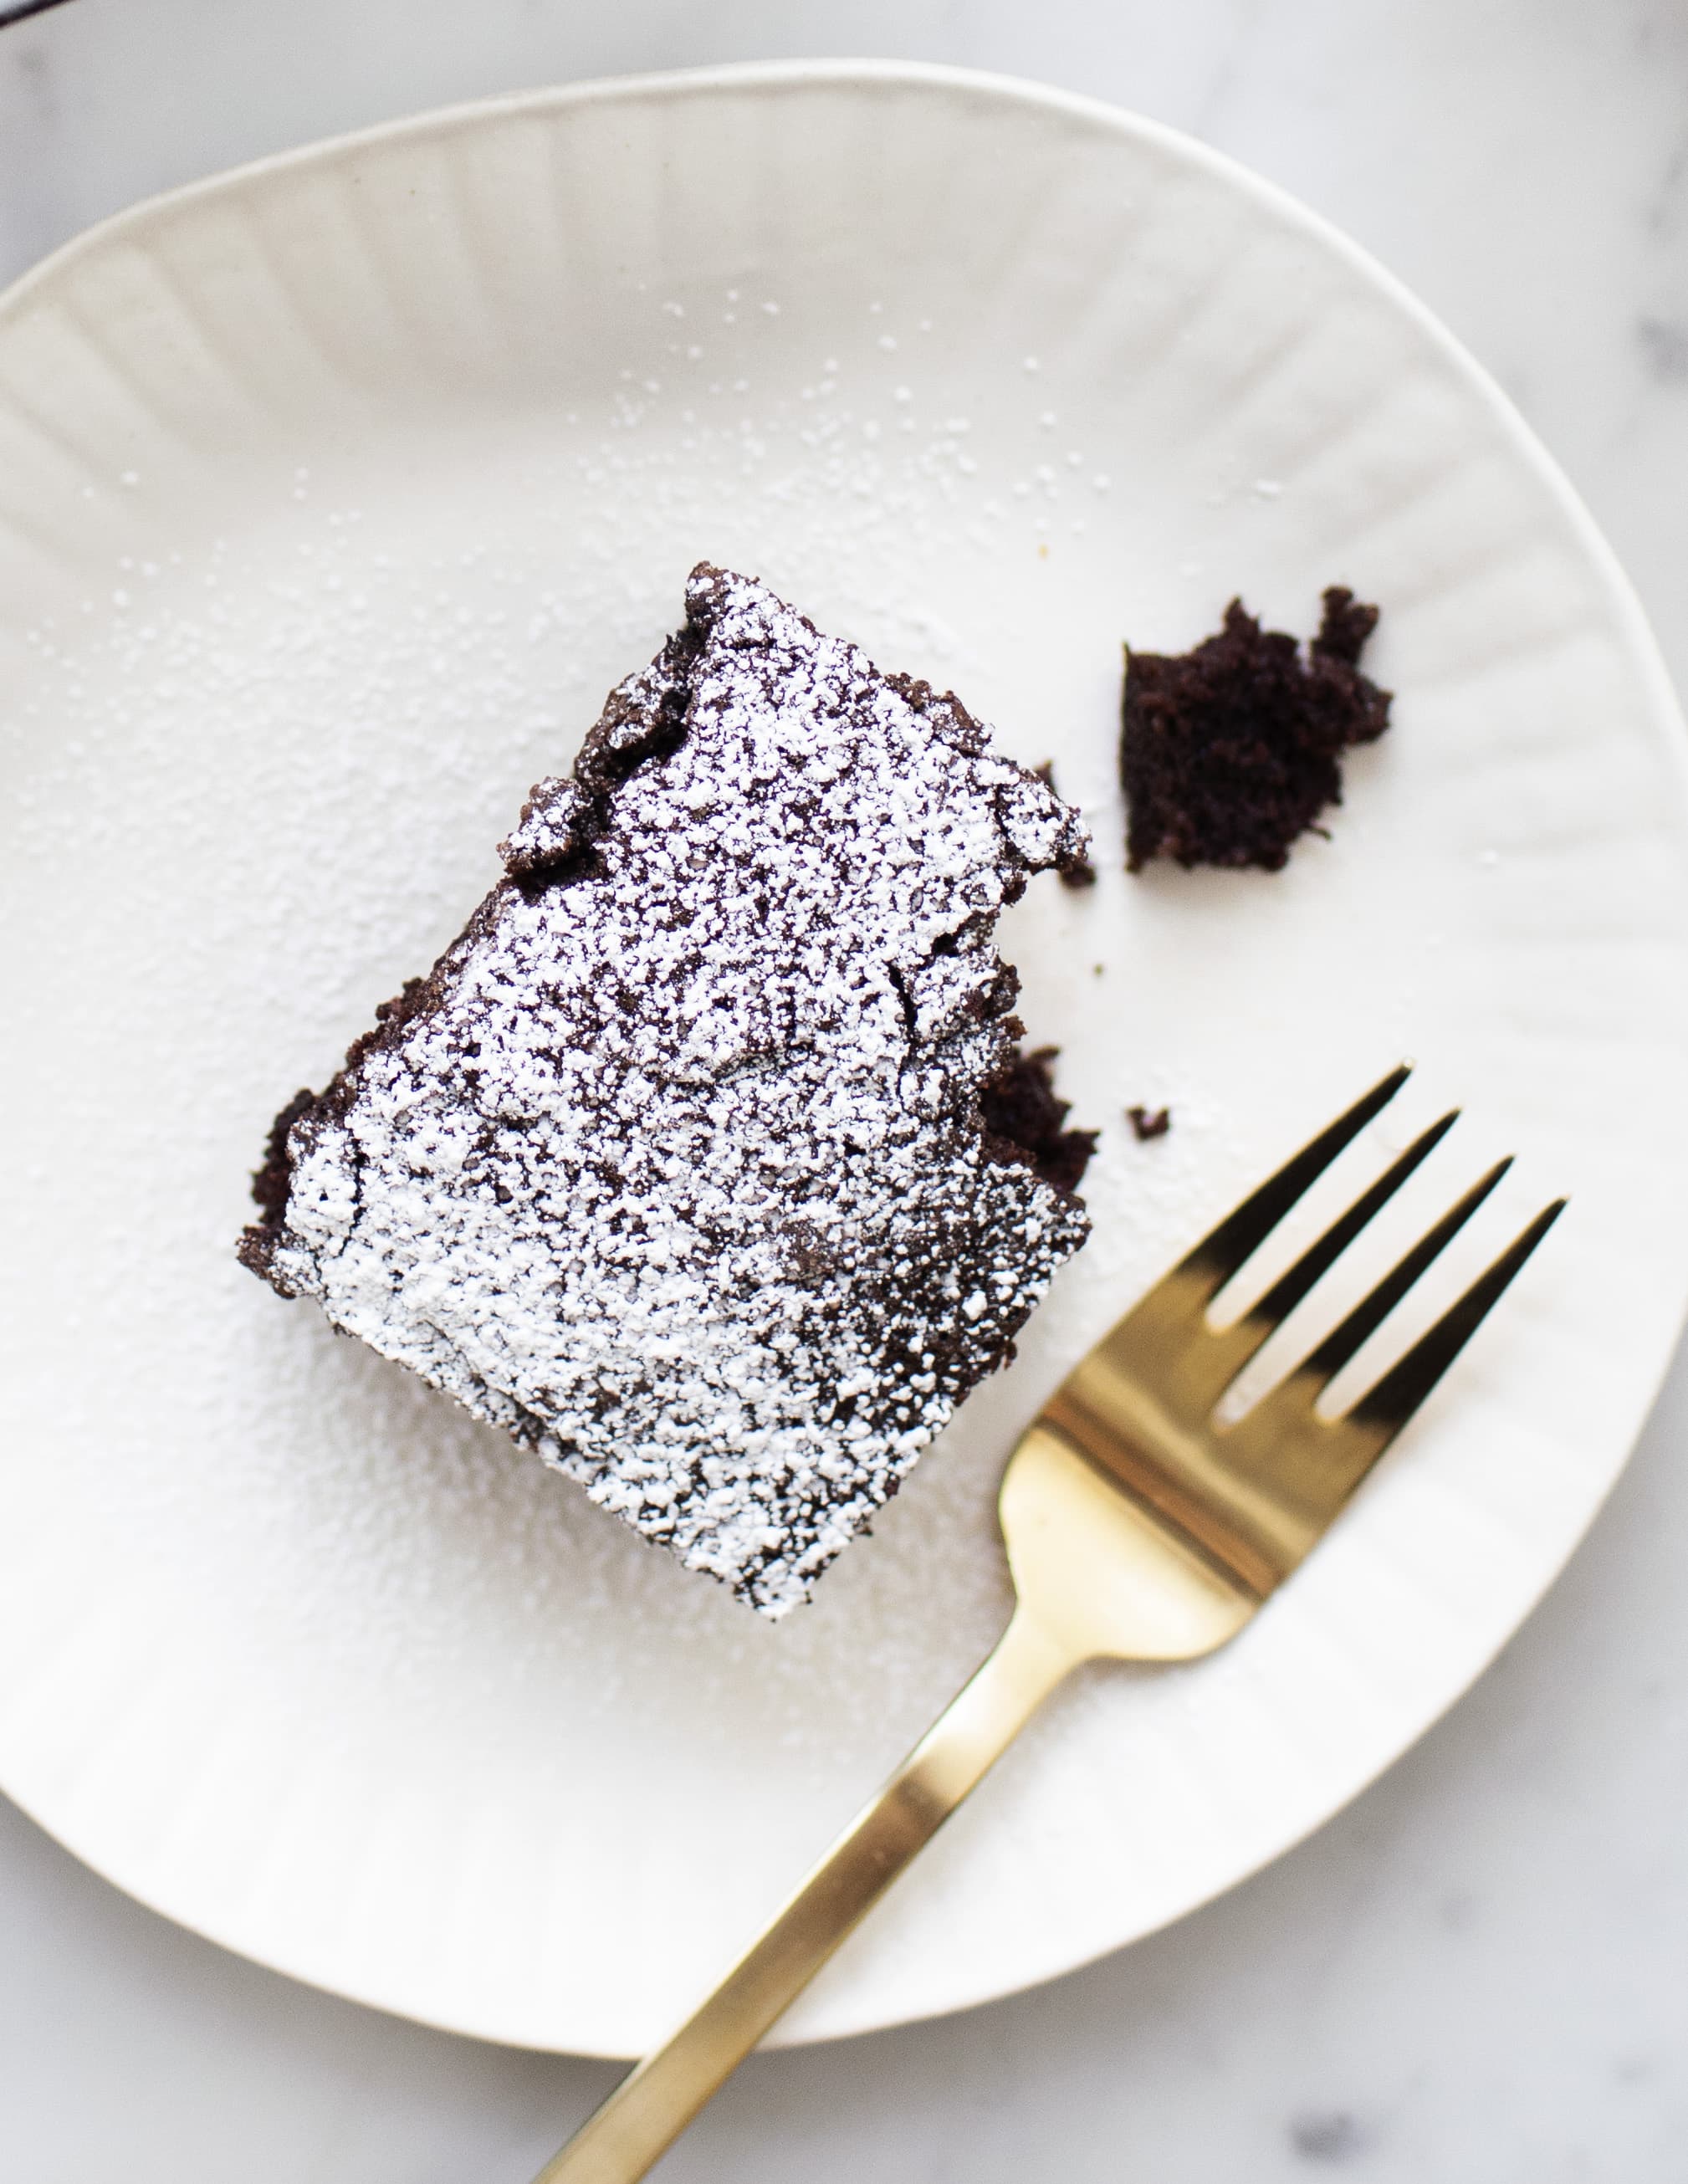 https://cdn.apartmenttherapy.info/image/upload/v1660364397/k/2022-08_KLL-Matilda-Chocolate-Cake/matilda-chocolate-cake-recipe.jpg